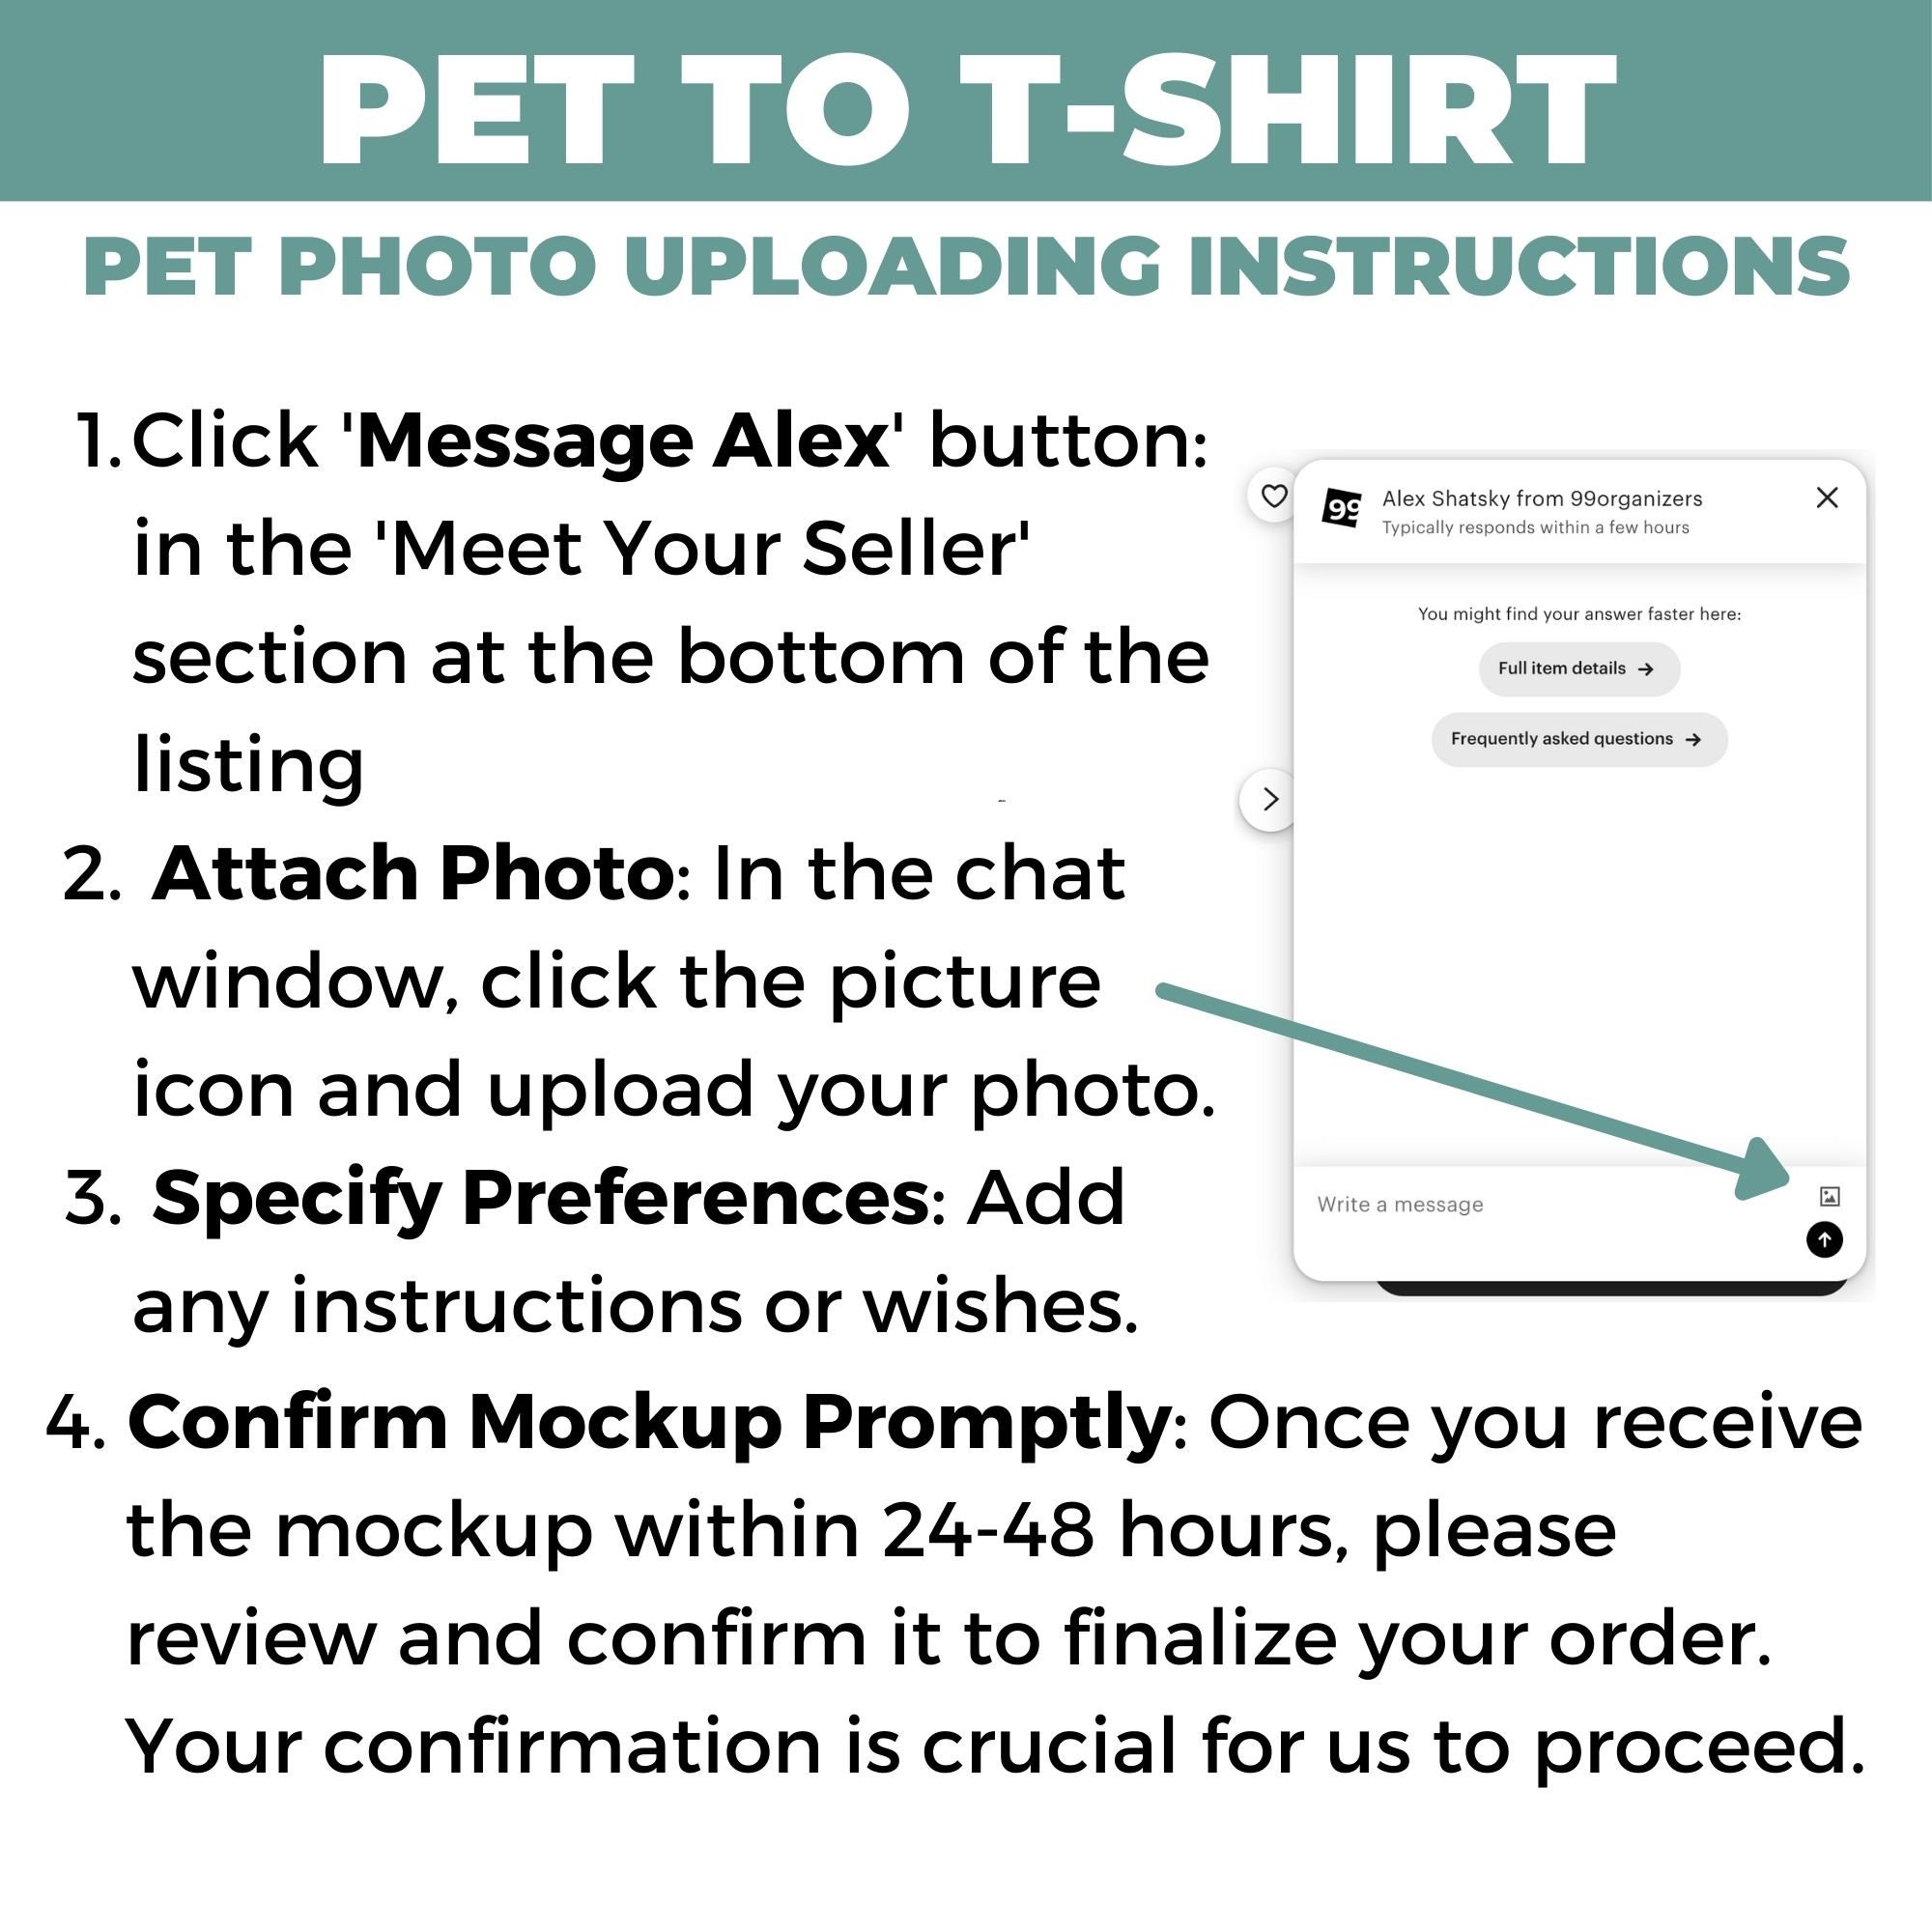 Custom Pet Shirt, Pet Photo Shirt, Personalized Pet T-shirt